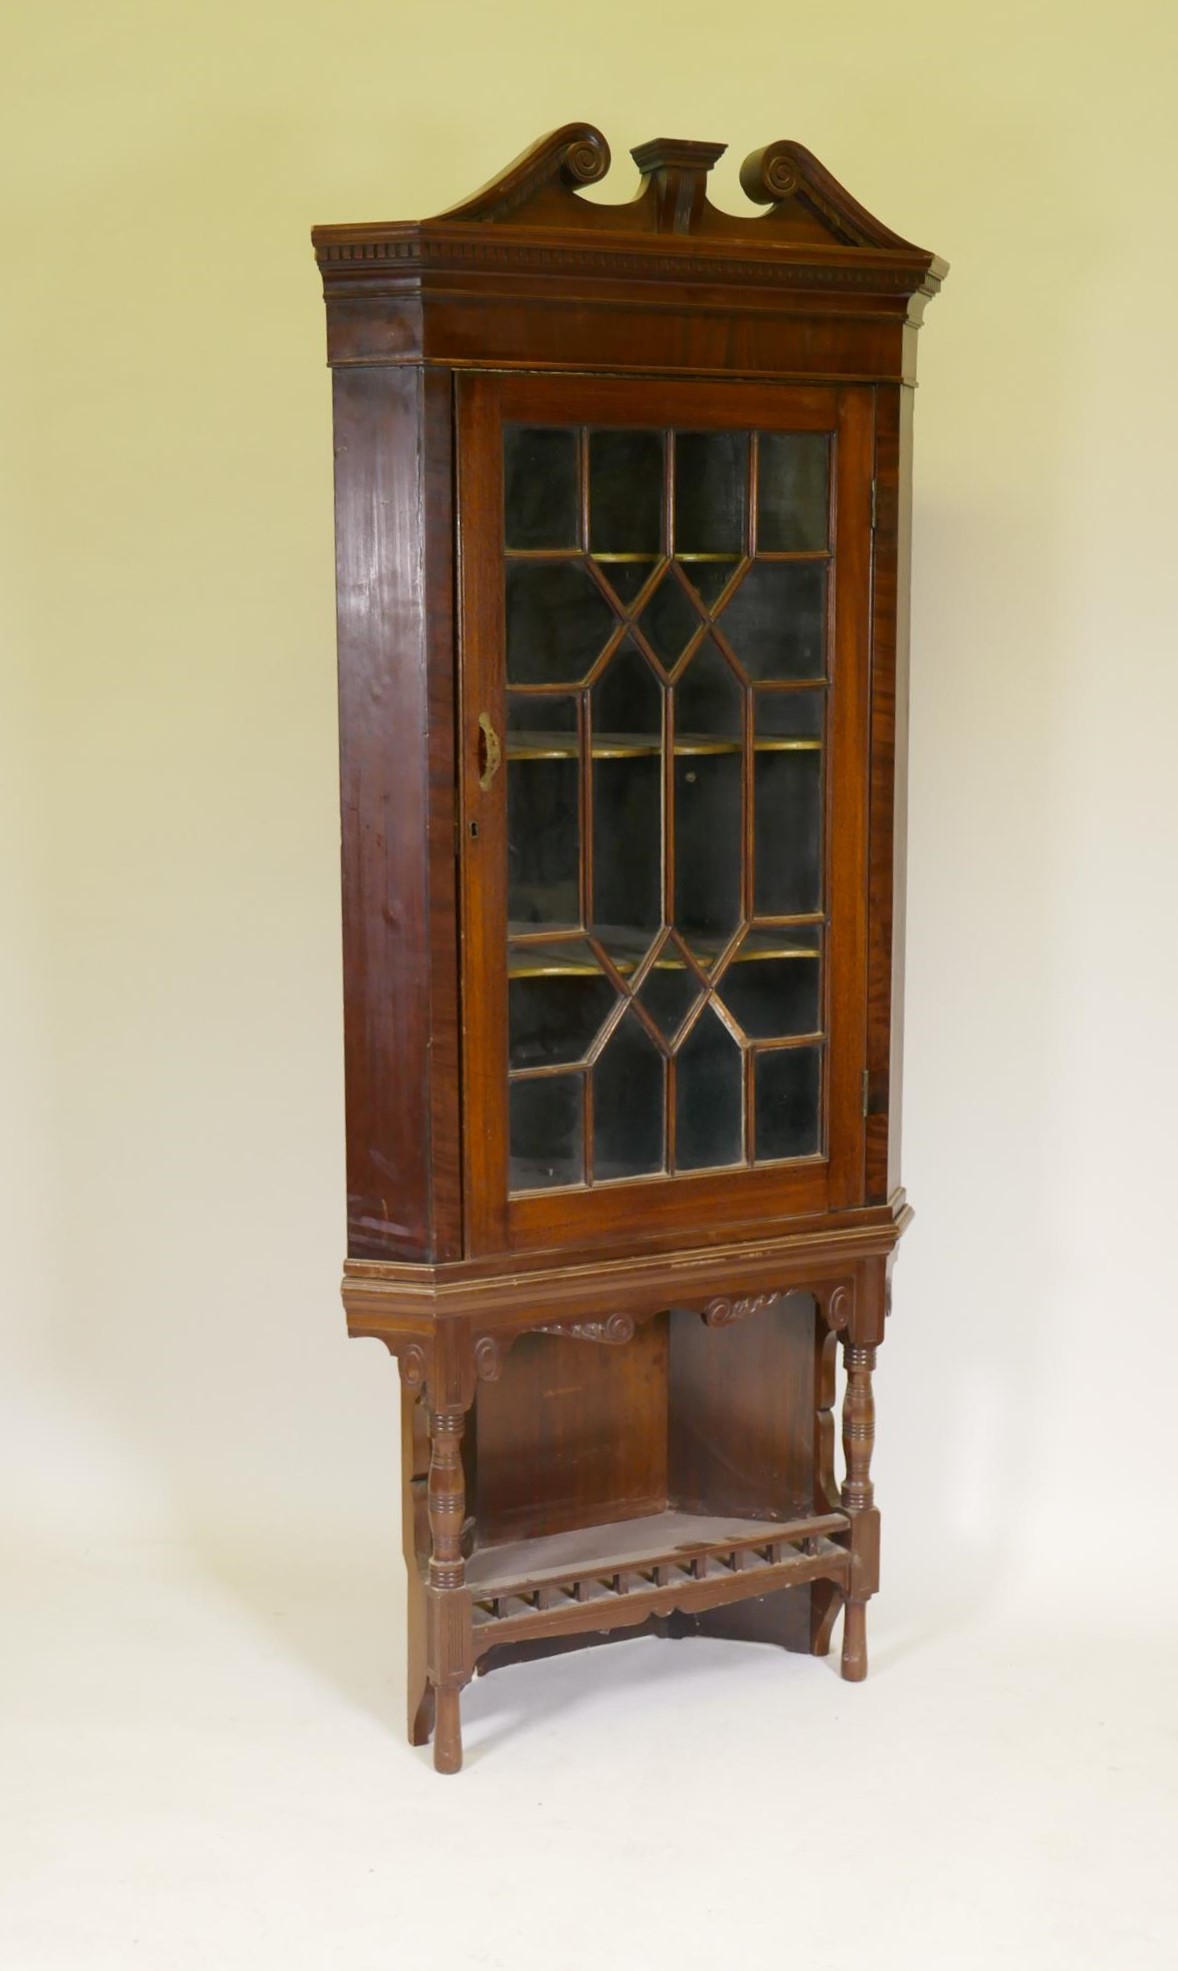 A Georgian mahogany corner display cabinet, with astragal glazed door below a dentil cornice and